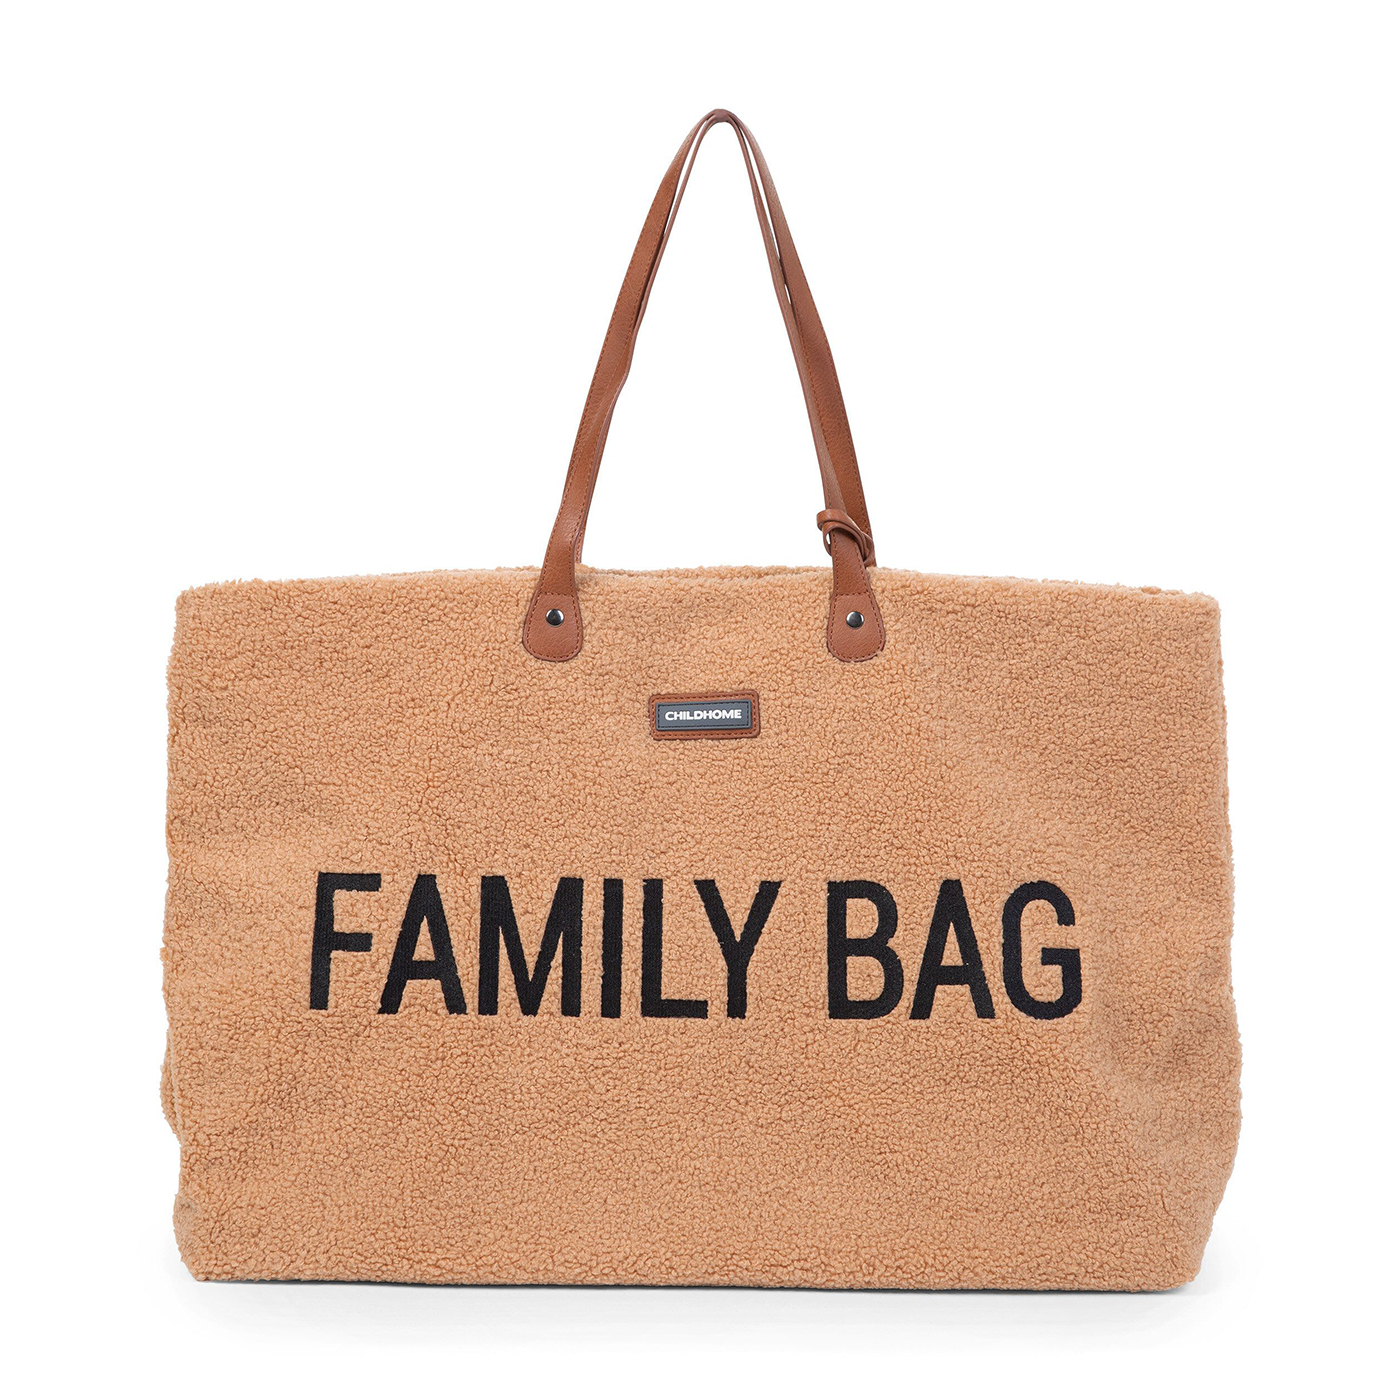  Childhome Family Bag Teddy Anne Bebek Çantası | Beige